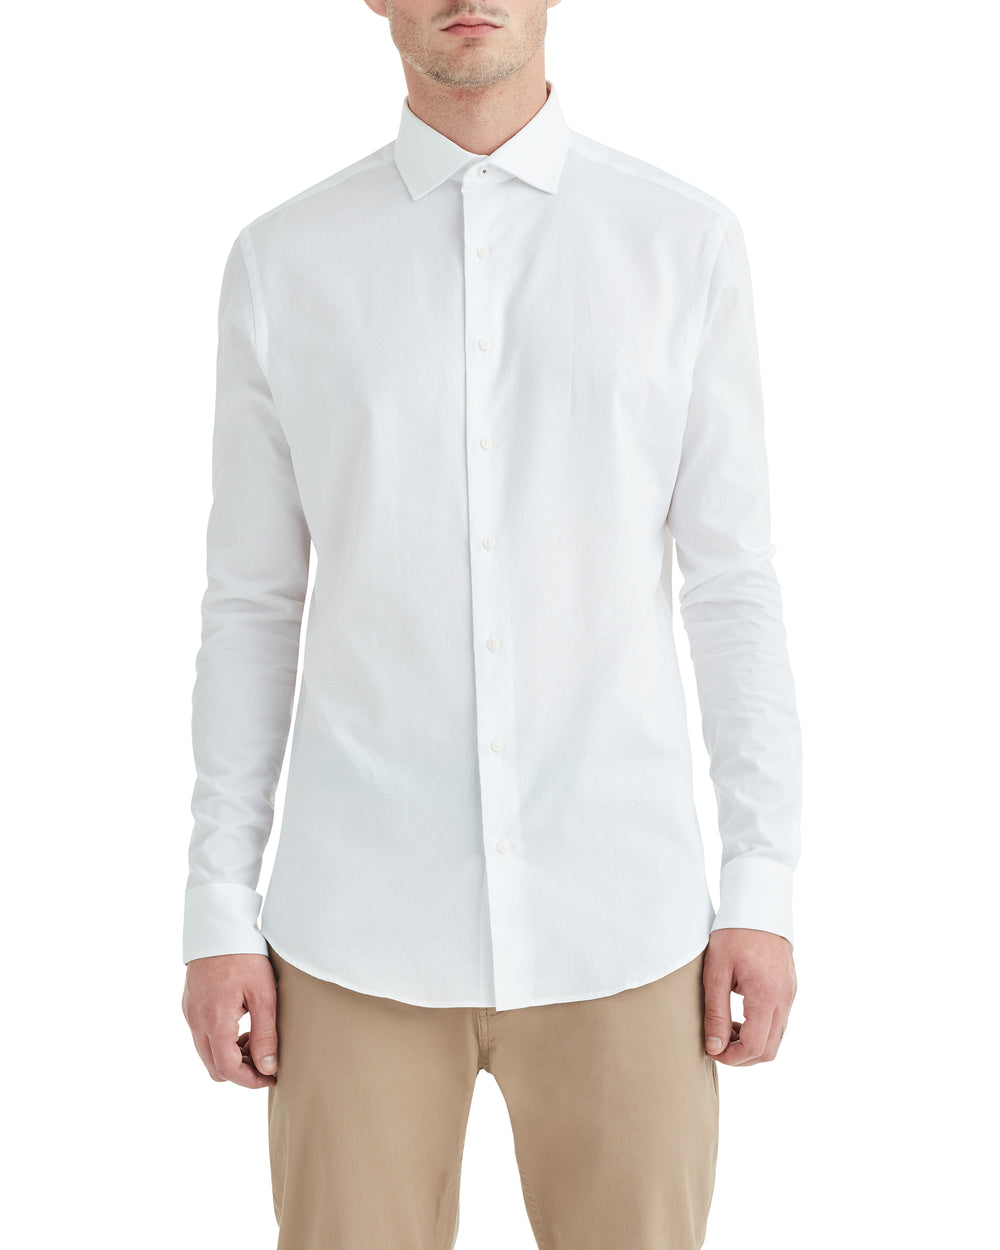 White on White Jacquard Slim Fit Dress Shirt - Ben Sherman